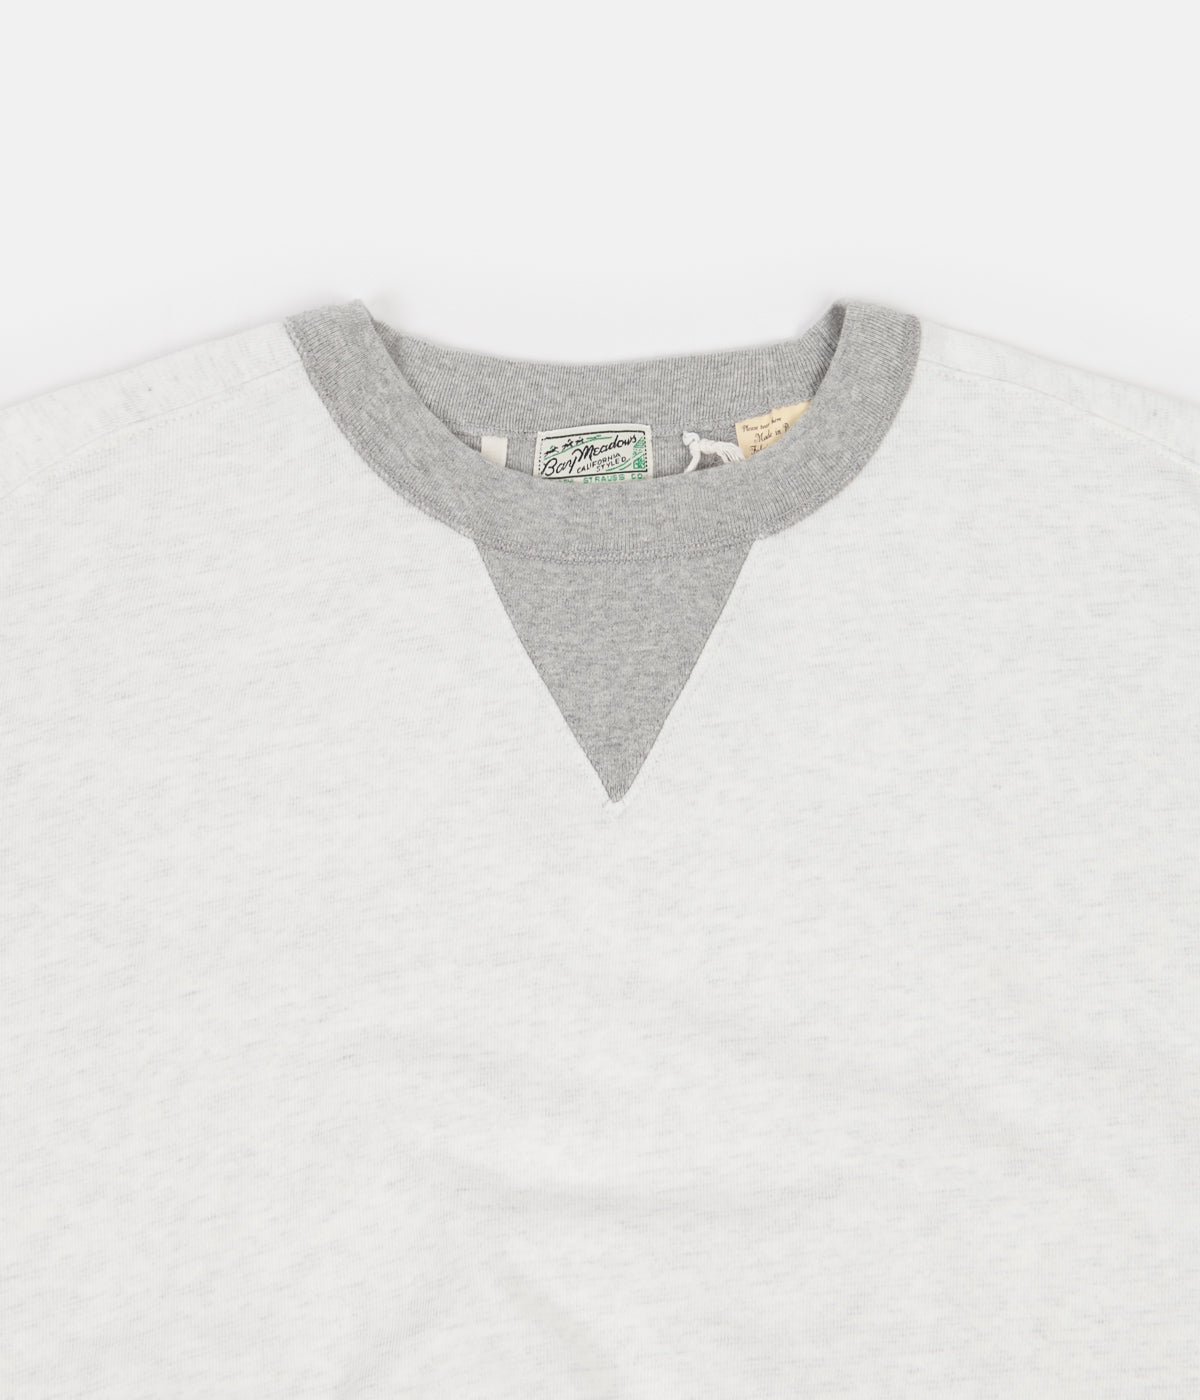 Levi's® Vintage Clothing Bay Meadows Sweatshirt - White / Grey | Always in  Colour